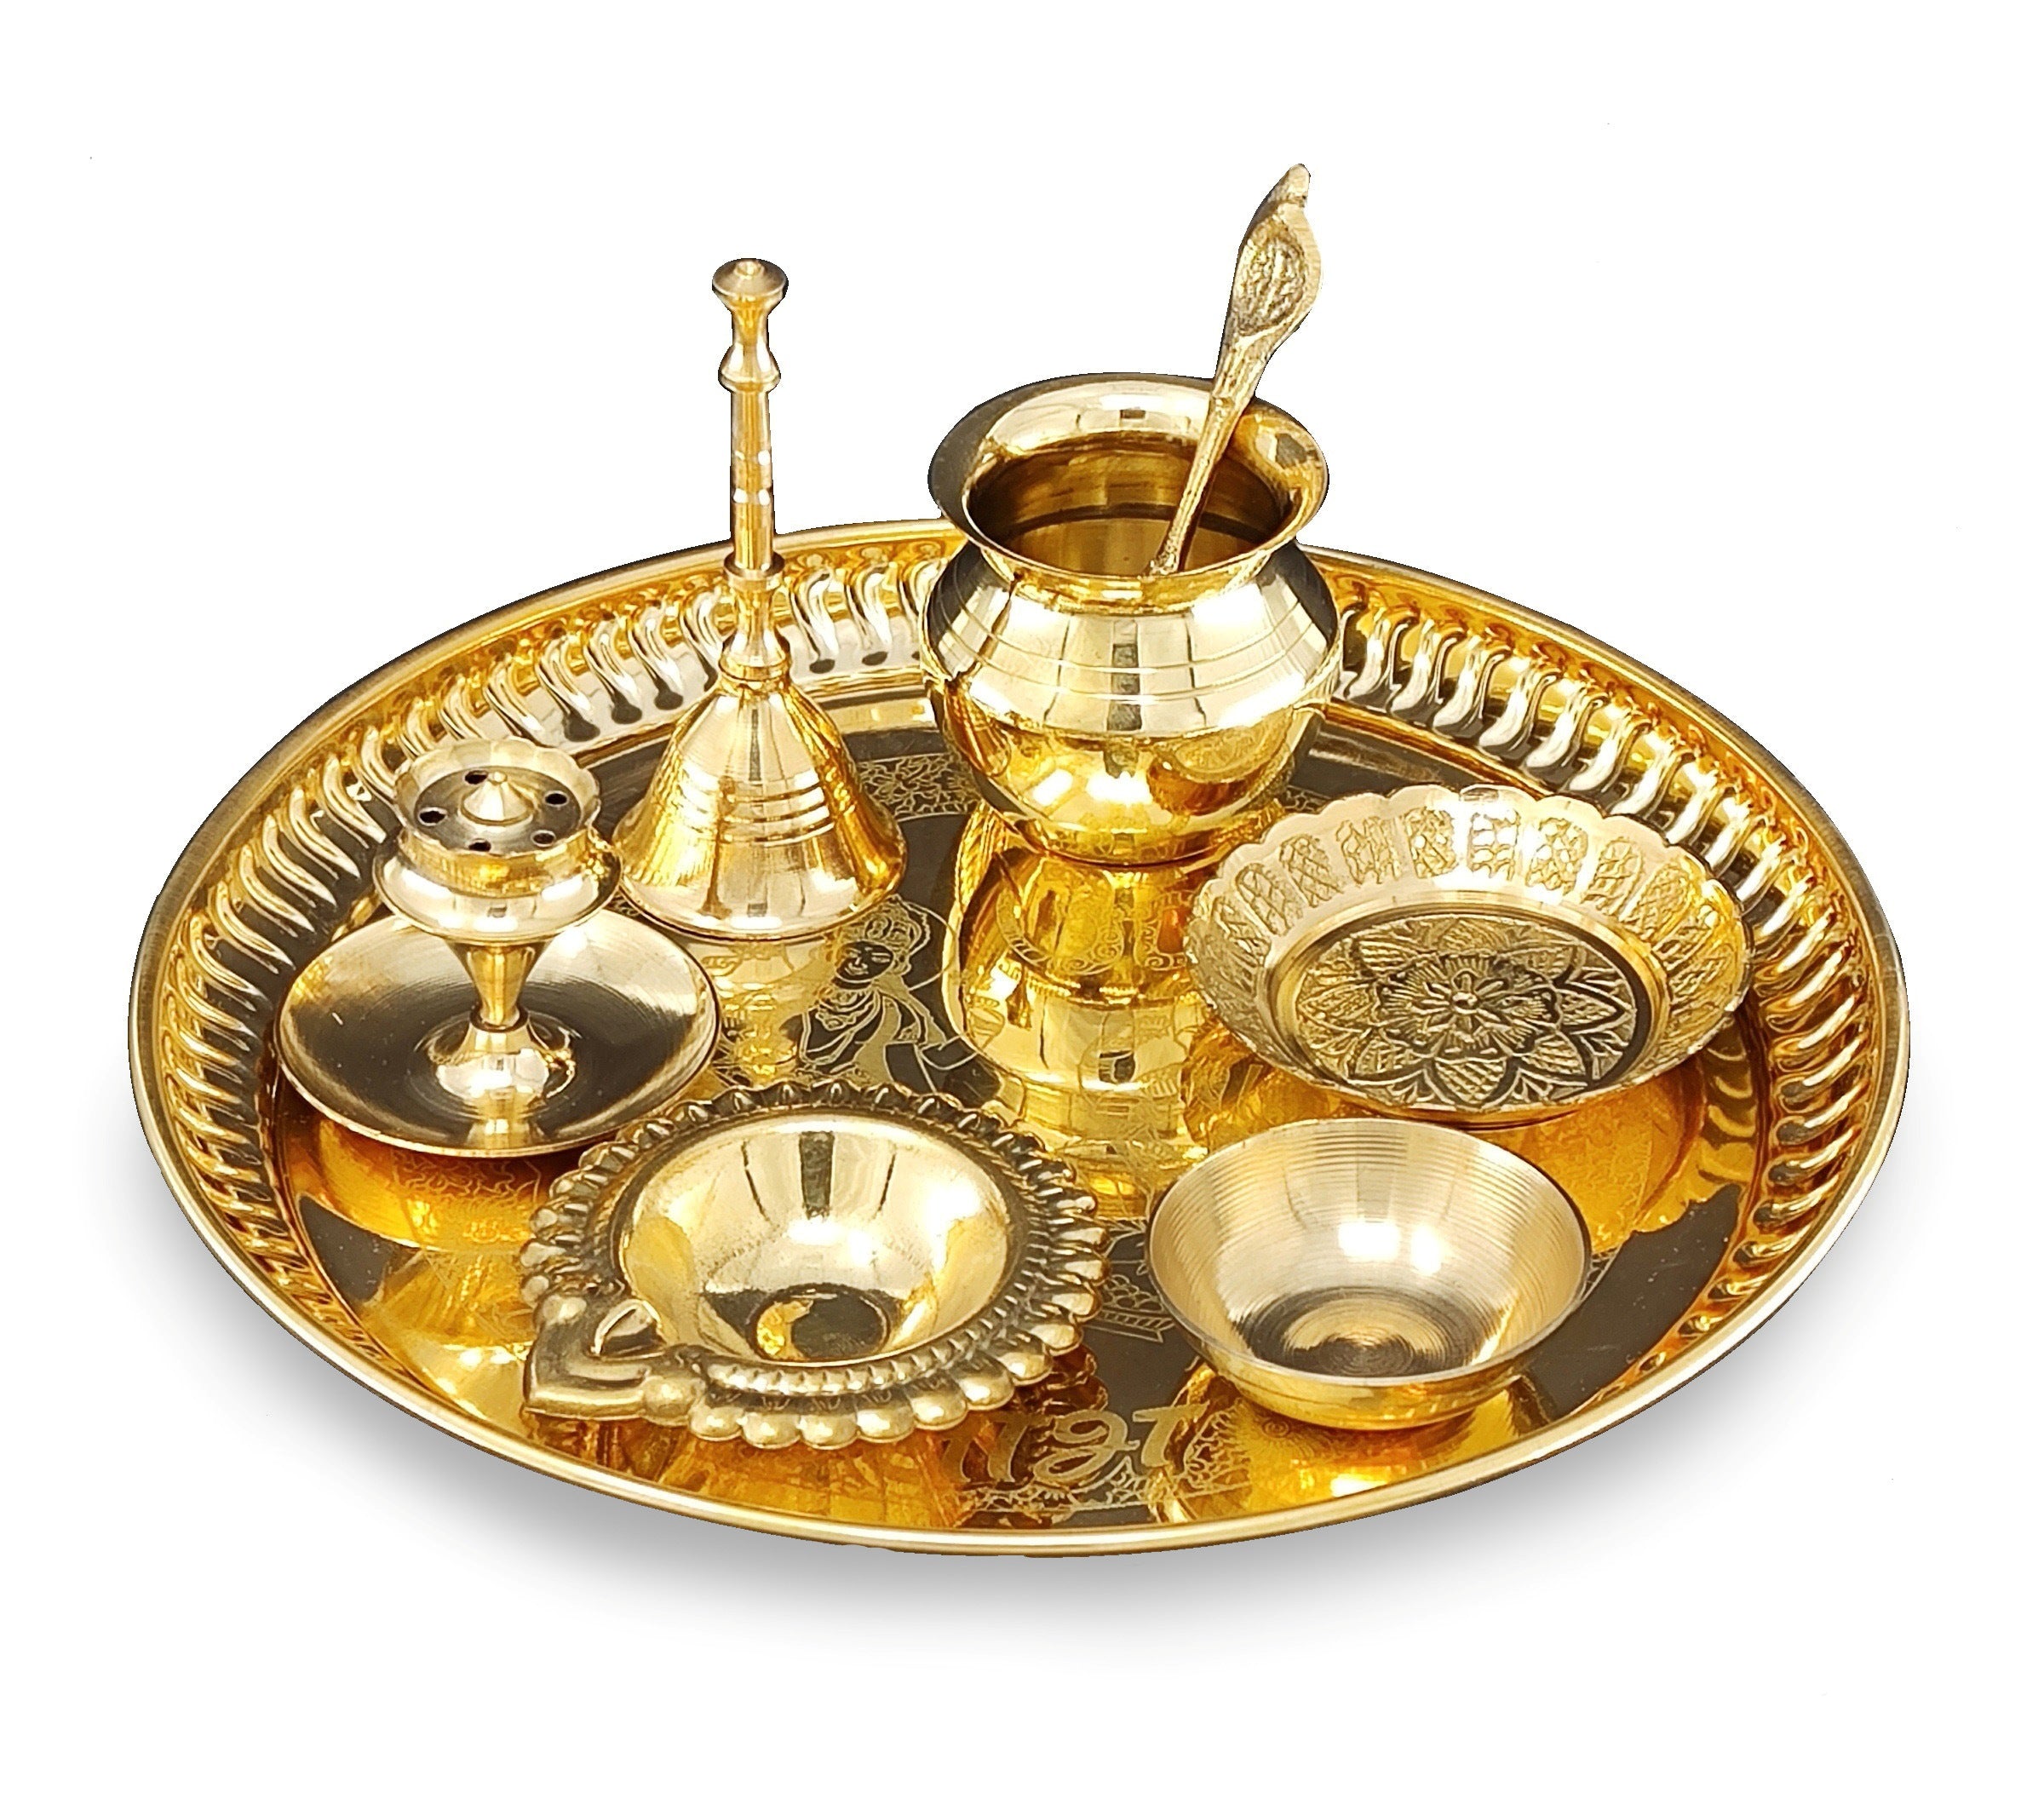 BENGALEN Brass Pooja Thali Set 8 Inch Puja Items with Pital Plate Kalash Palli Kangura Plate Chandan Vati Diya Dhup Dan Ghanti Arti Thali for Diwali Home Office Mandir Wedding Return Gift Items